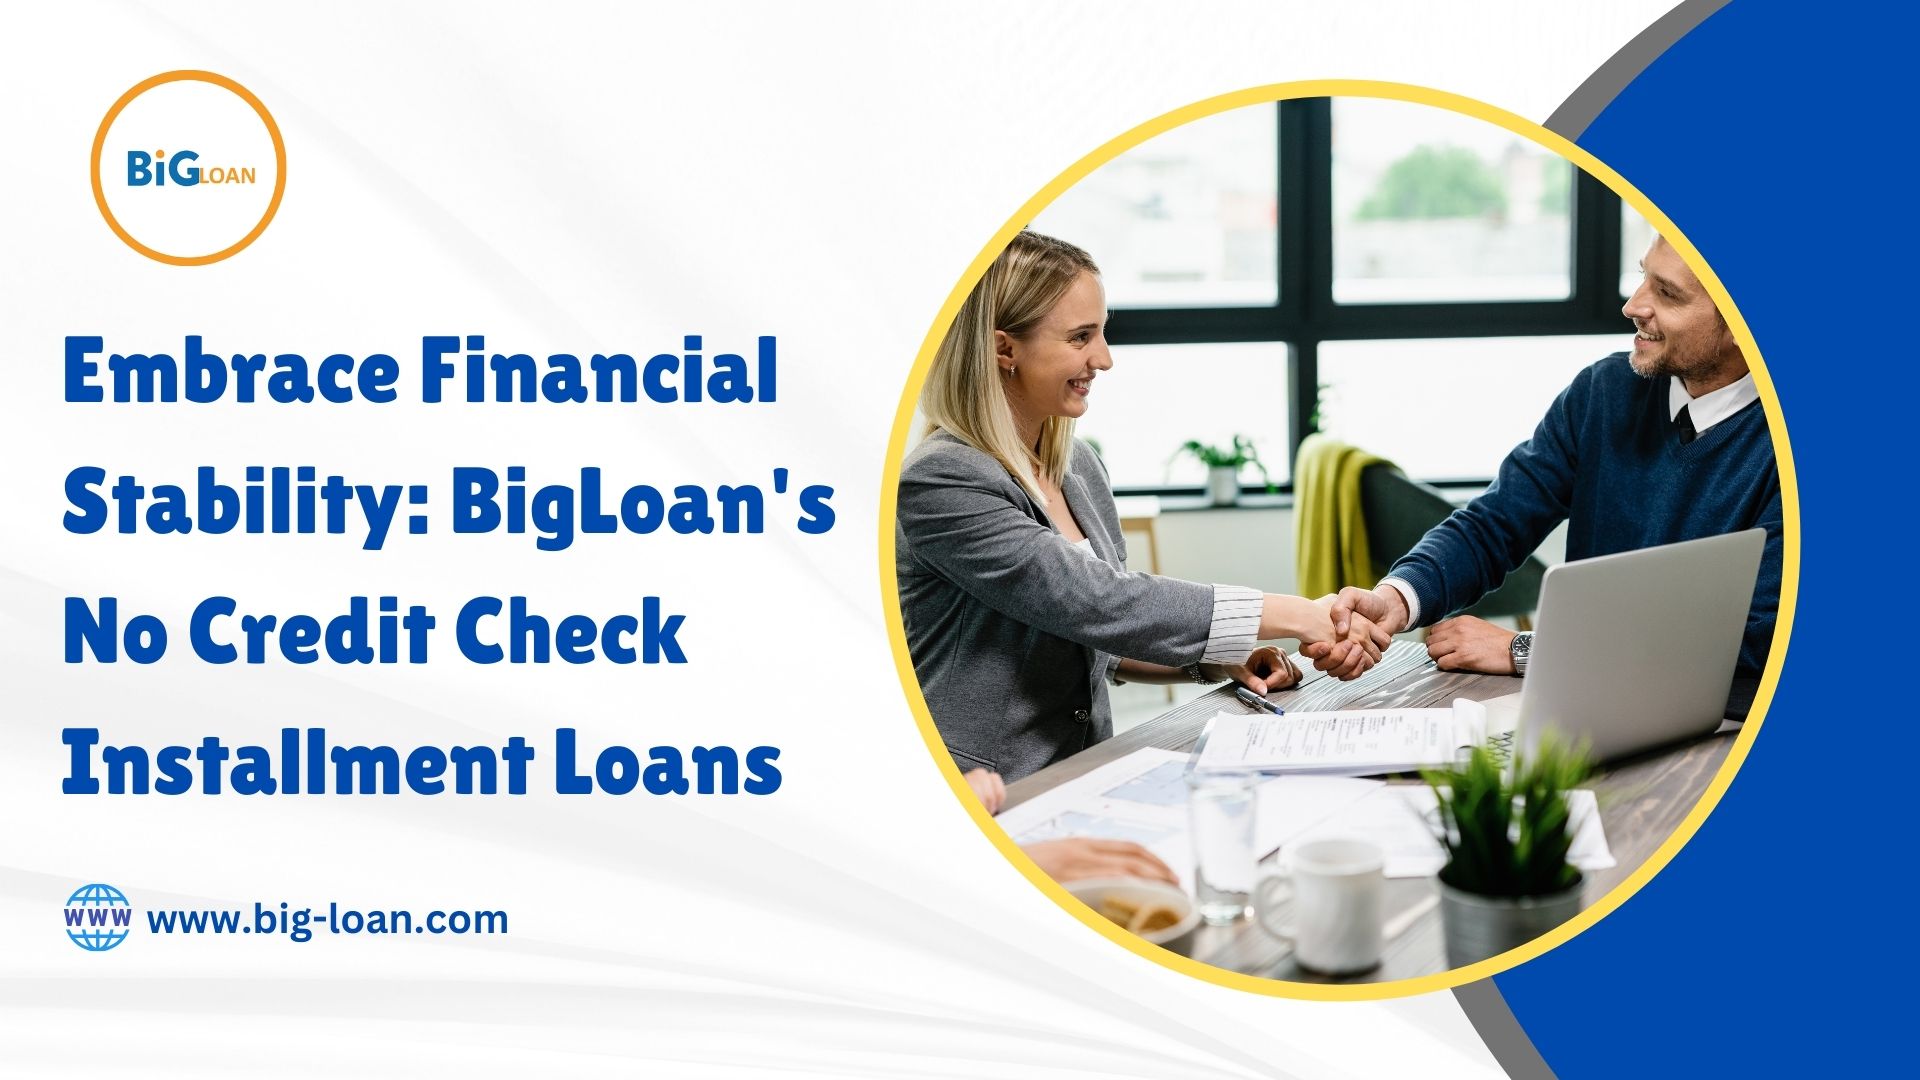  Simplify Your Finances: BigLoan's No Credit Check Installment Loans